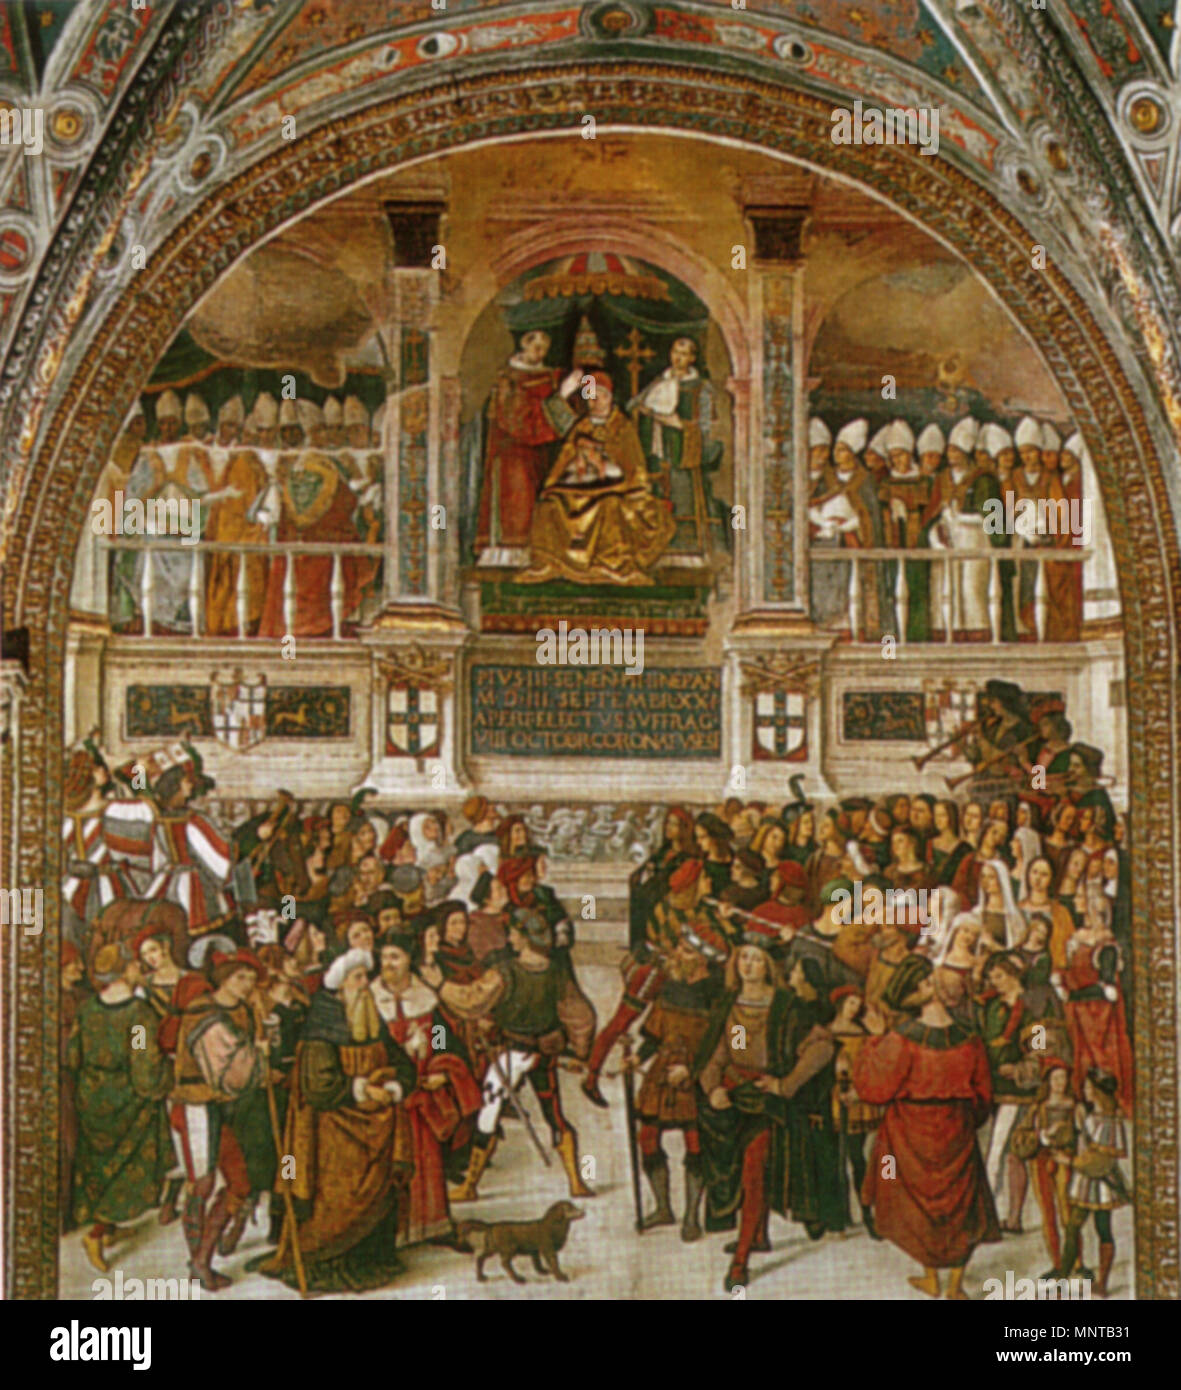 Coronation of Pius III . Pinturicchio, incoronazione di Pio III, 1503-1508, duomo di siena . between 1500 and 1501.   999 Pinturicchio, incoronazione di Pio III, 1503-1508, duomo di siena Stock Photo